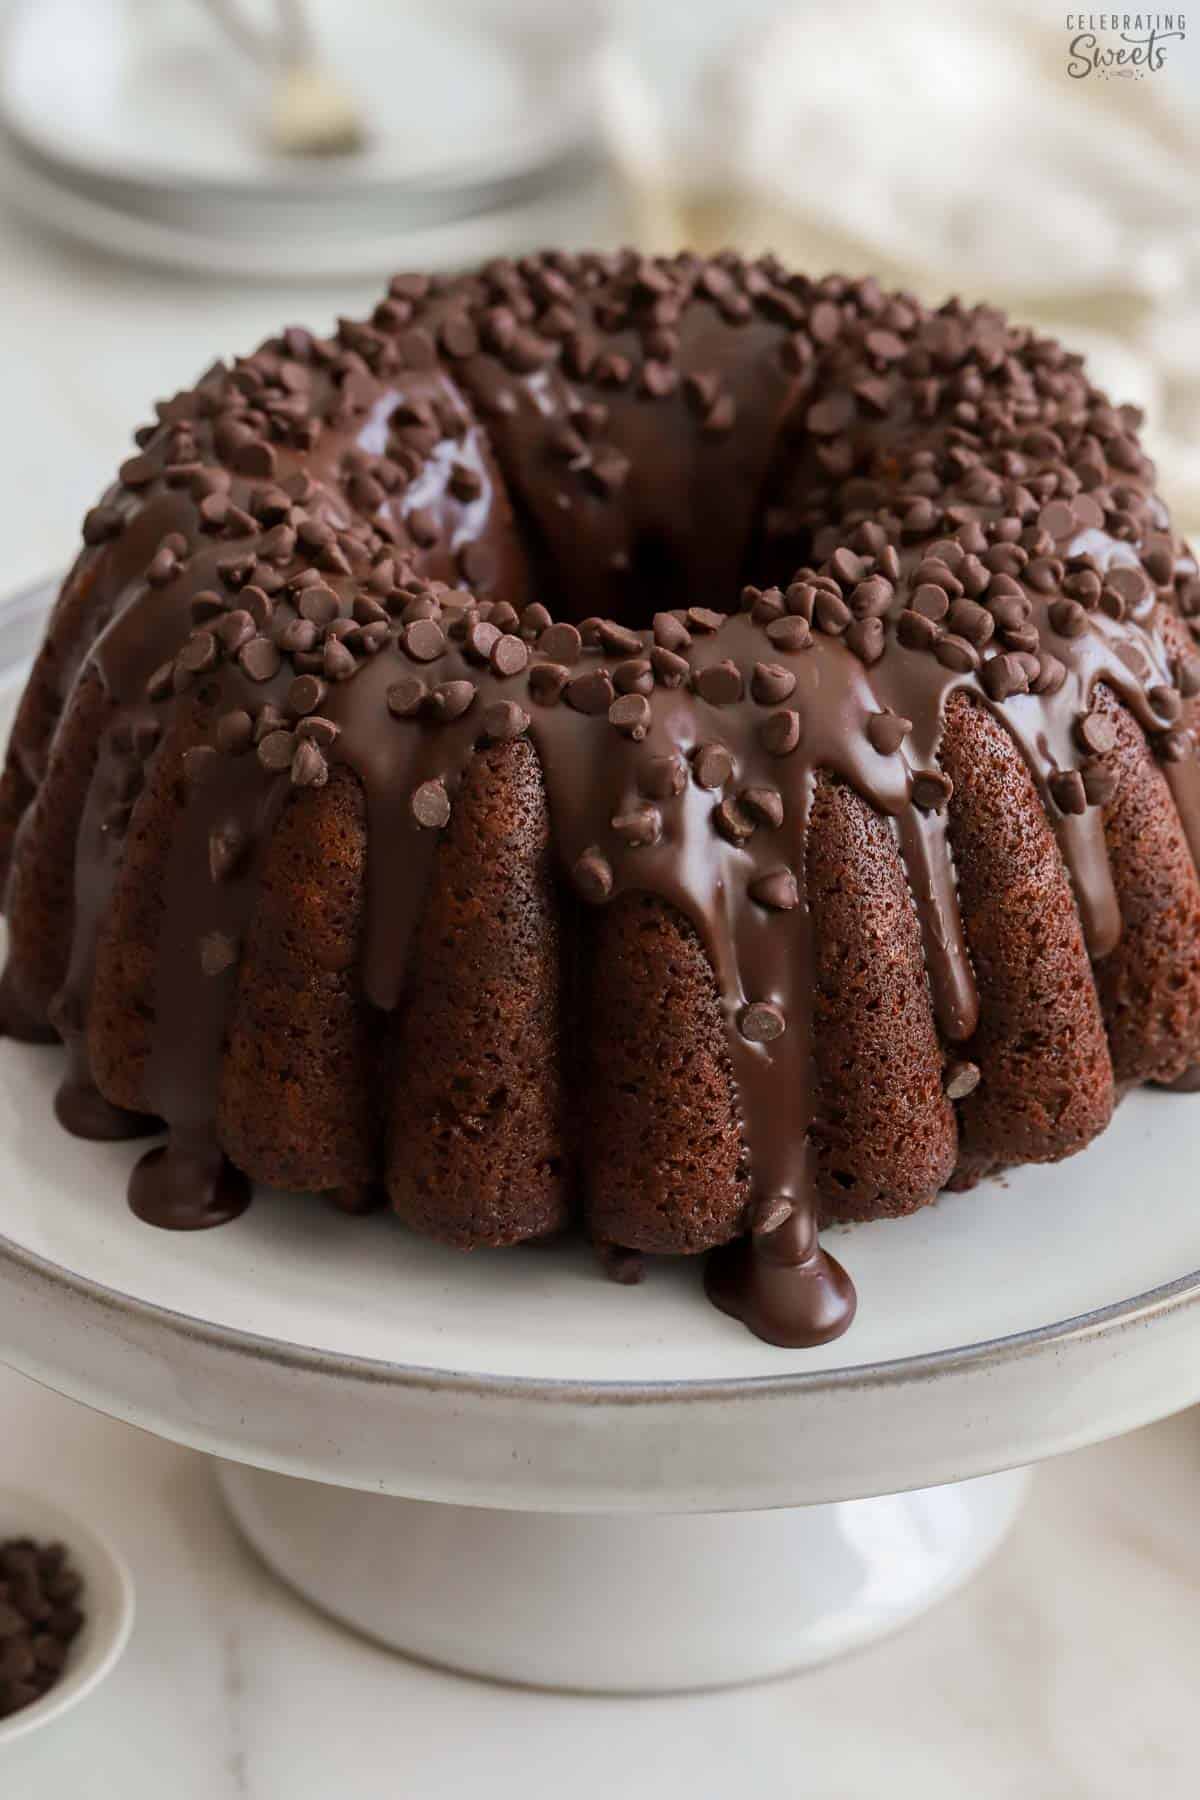 Chocolate bundt cake on a grey cake stand.